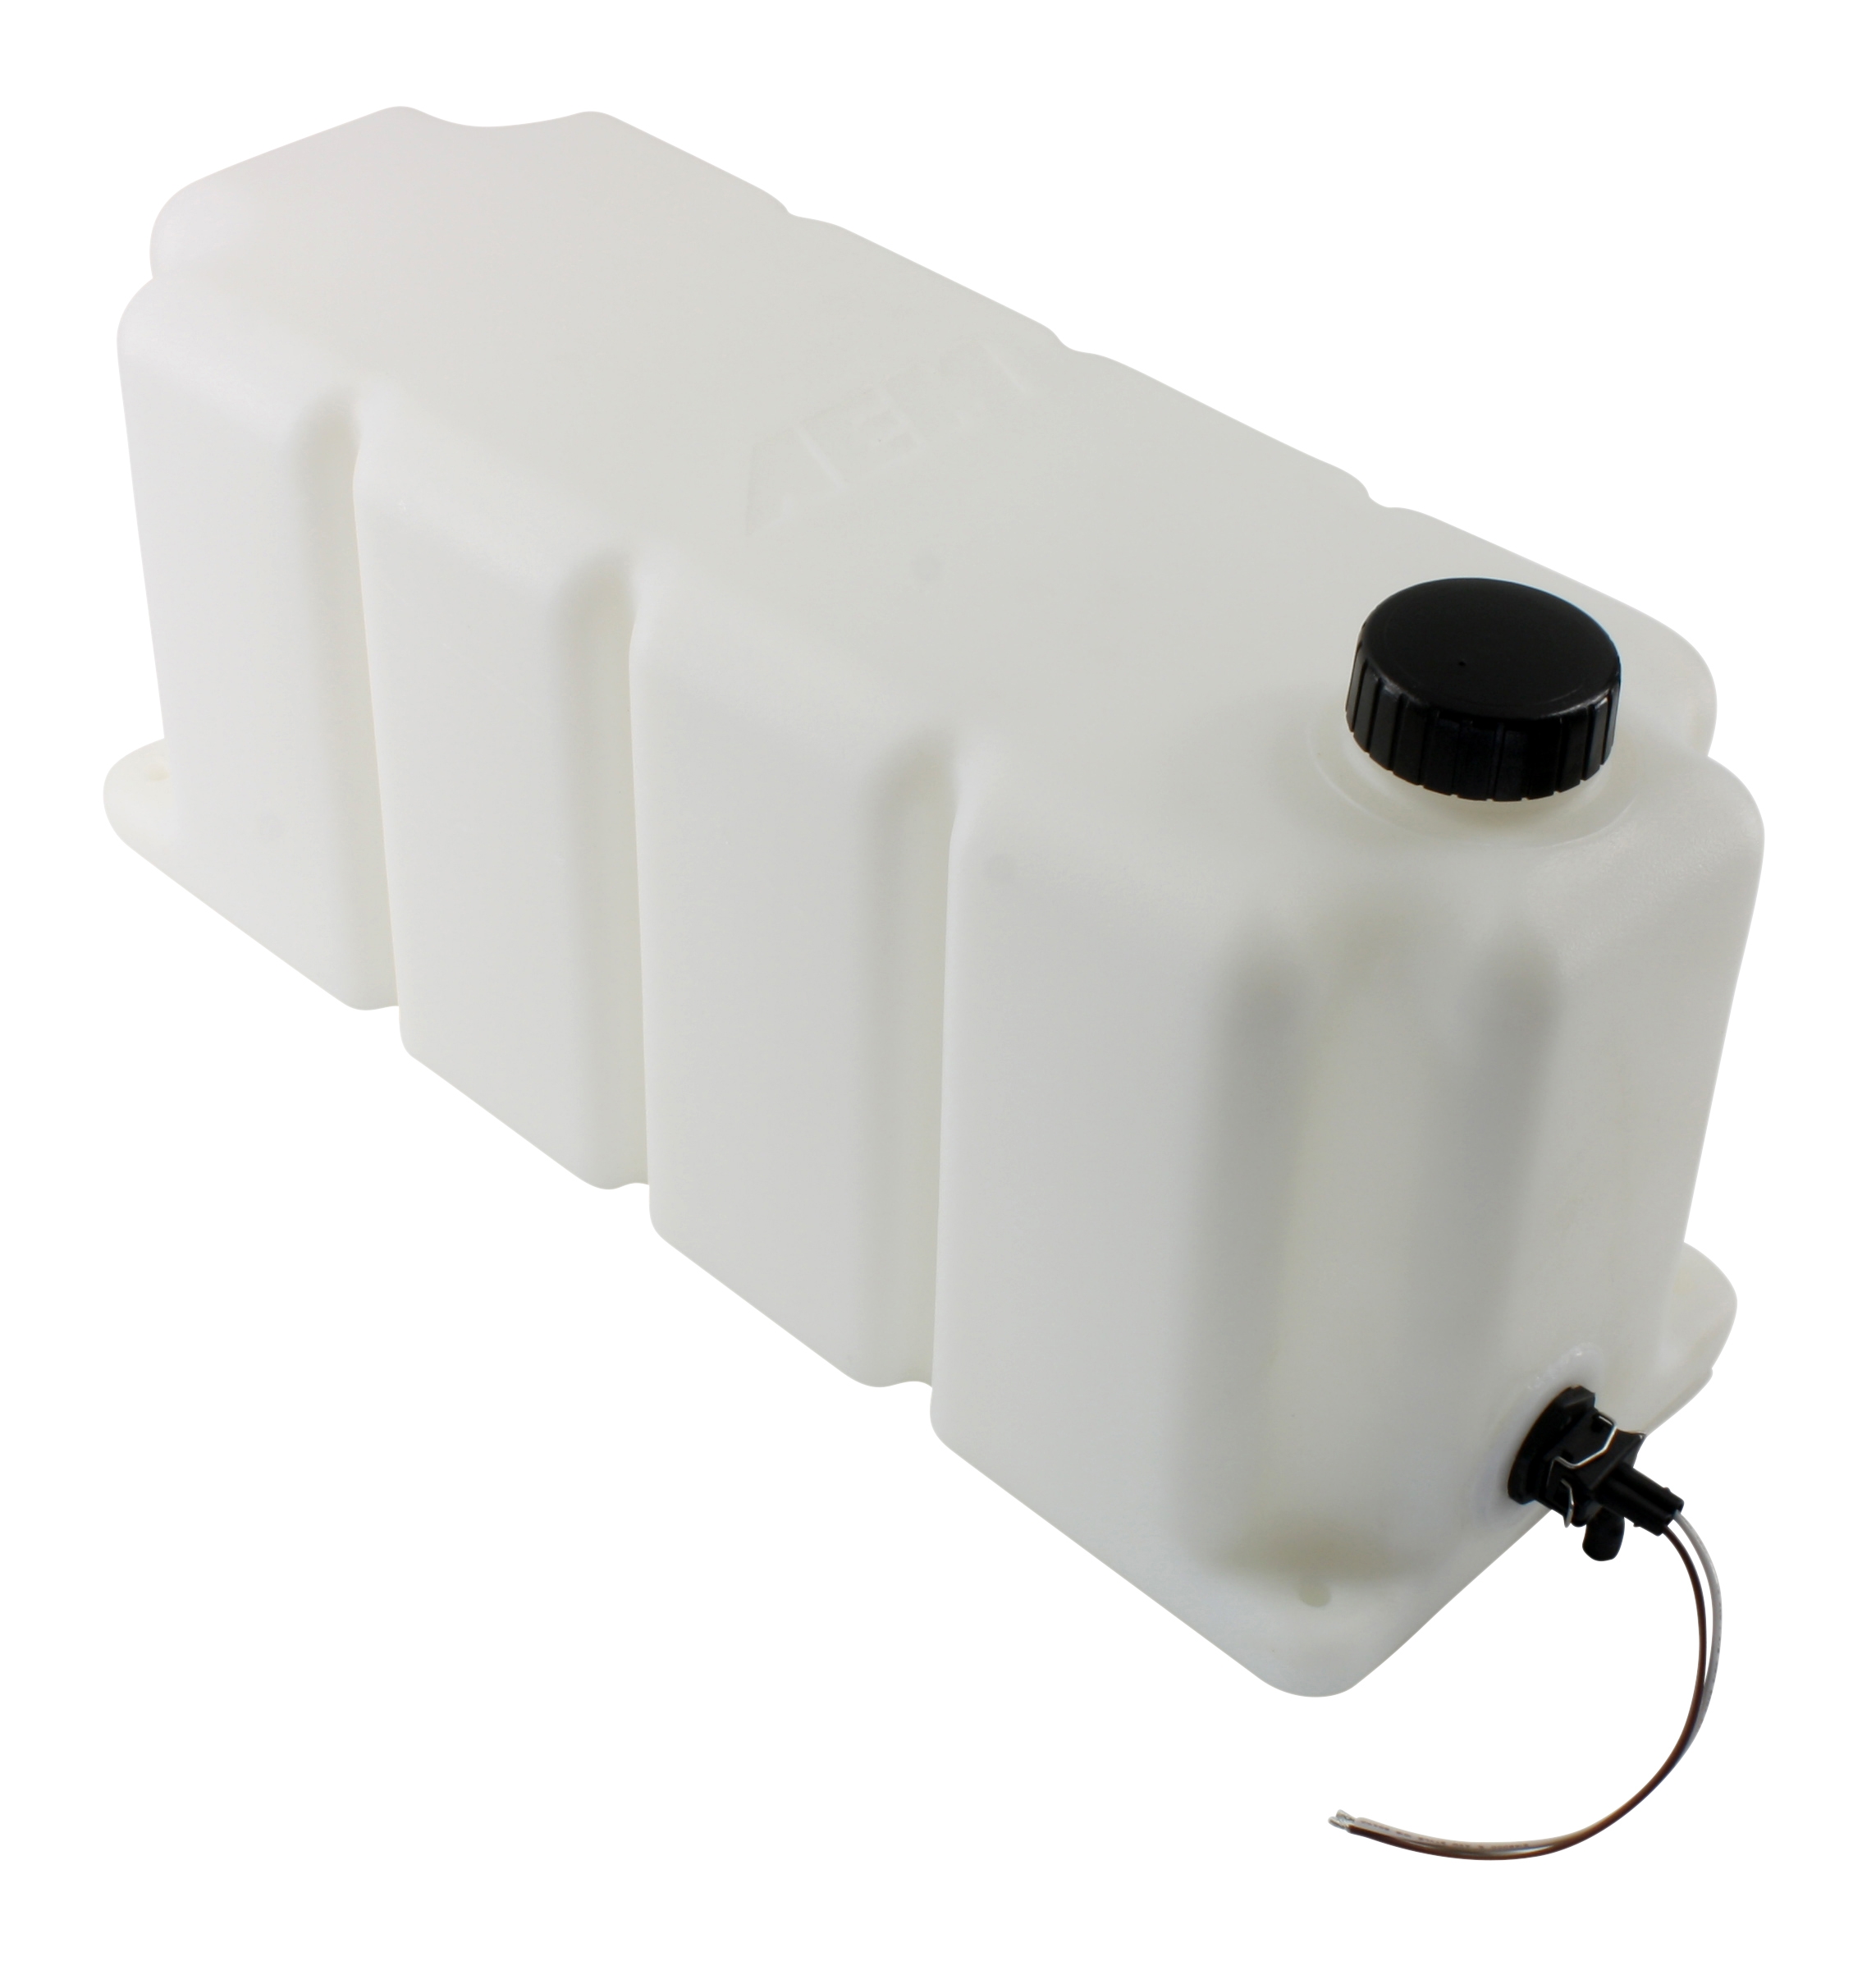 AEM V2 Water/Methanol Injection 5 Gallon Tank Kit with Conductive Fluid Level Sensor